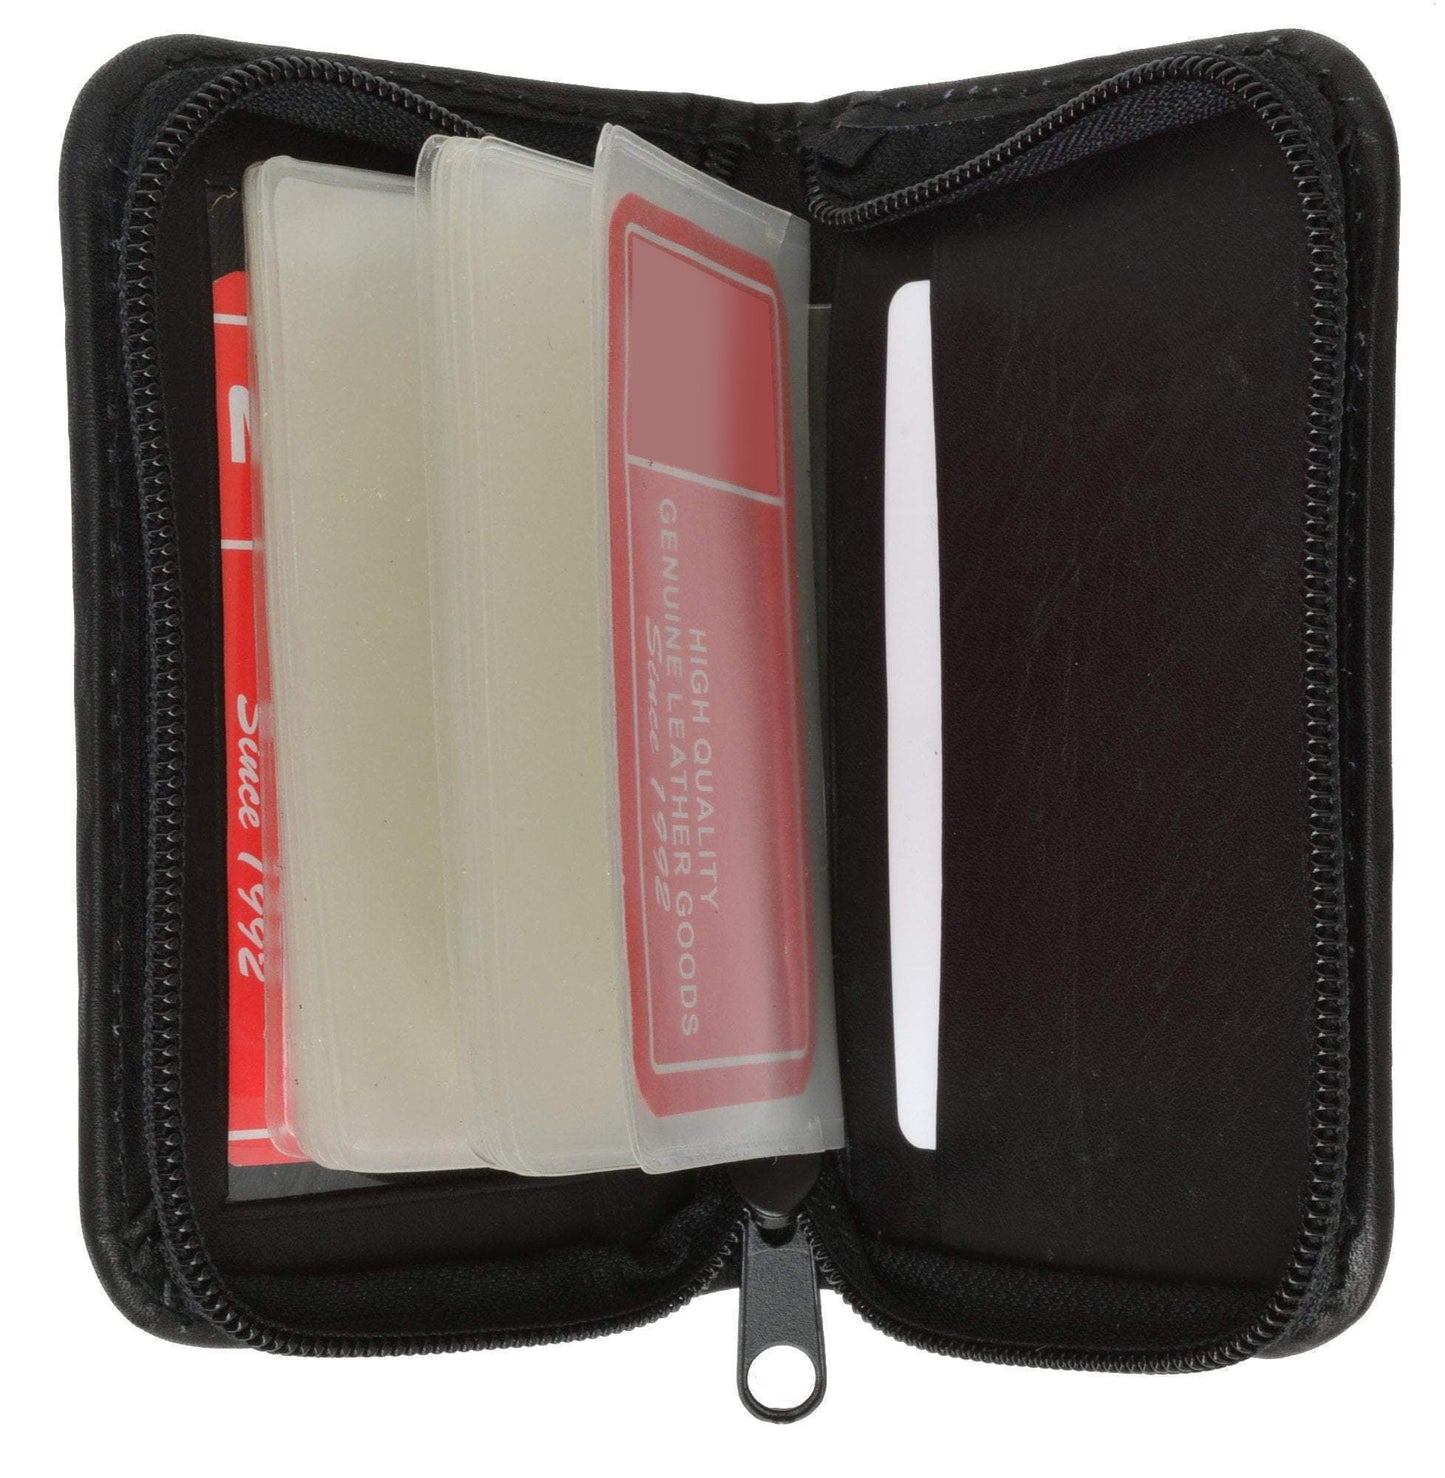 RFID Blocking Genuine Leather Business Card Holder Clear Plastic Inserts Pocket Organizer Wallet